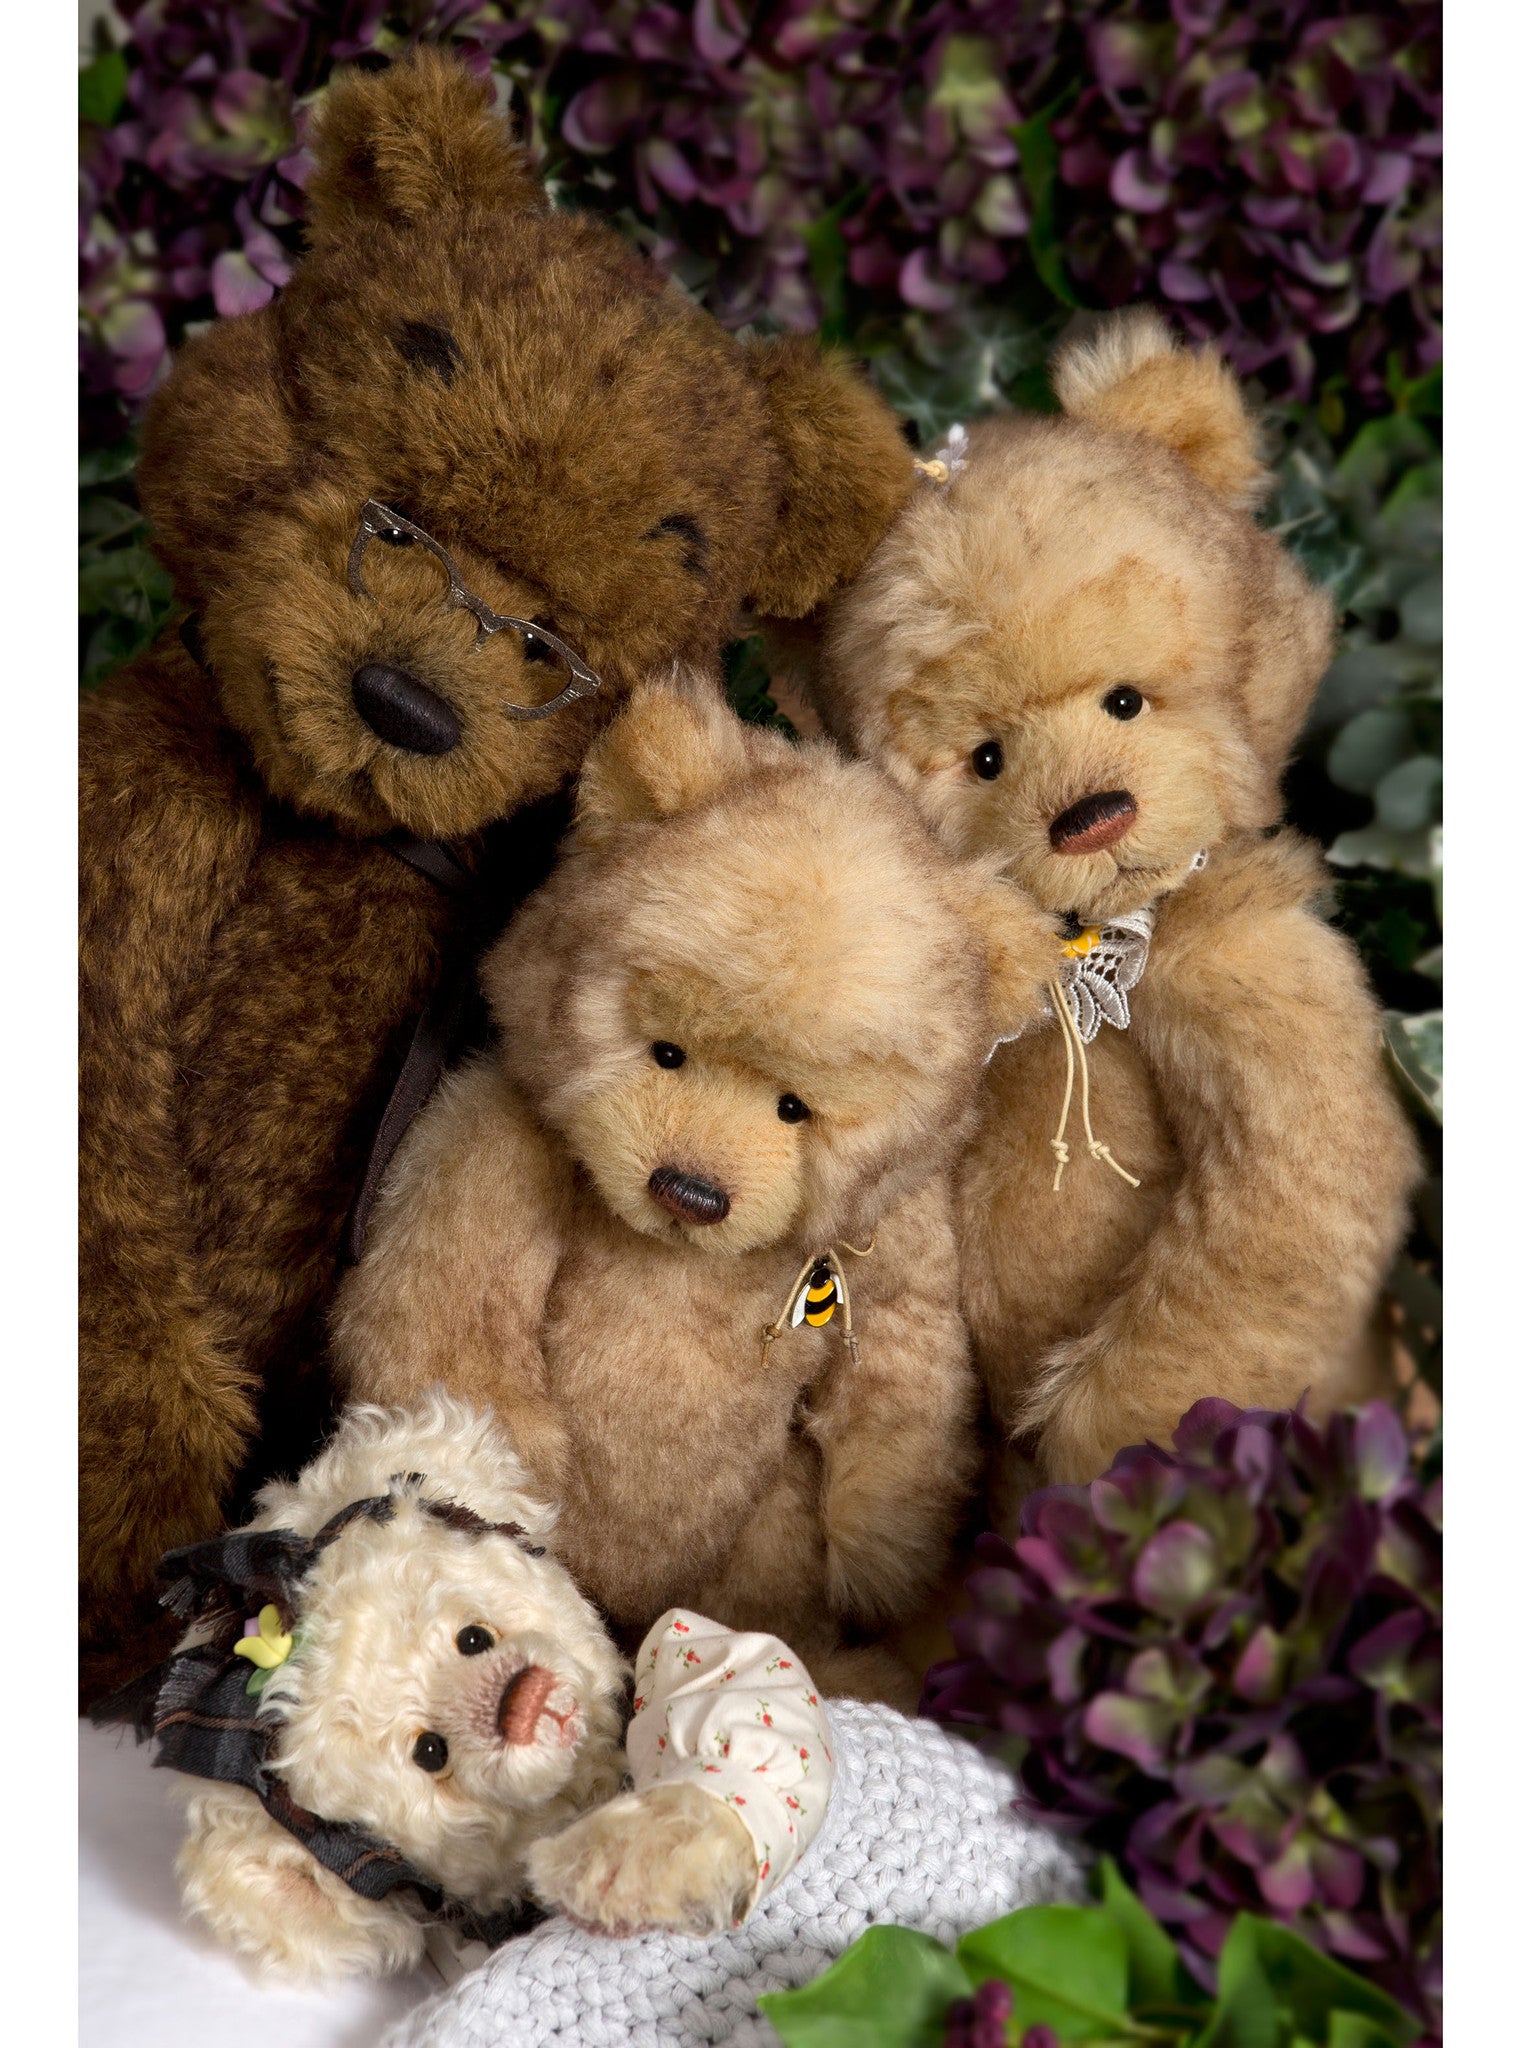 Goldilocks and the Three Bears by Charlie Bears